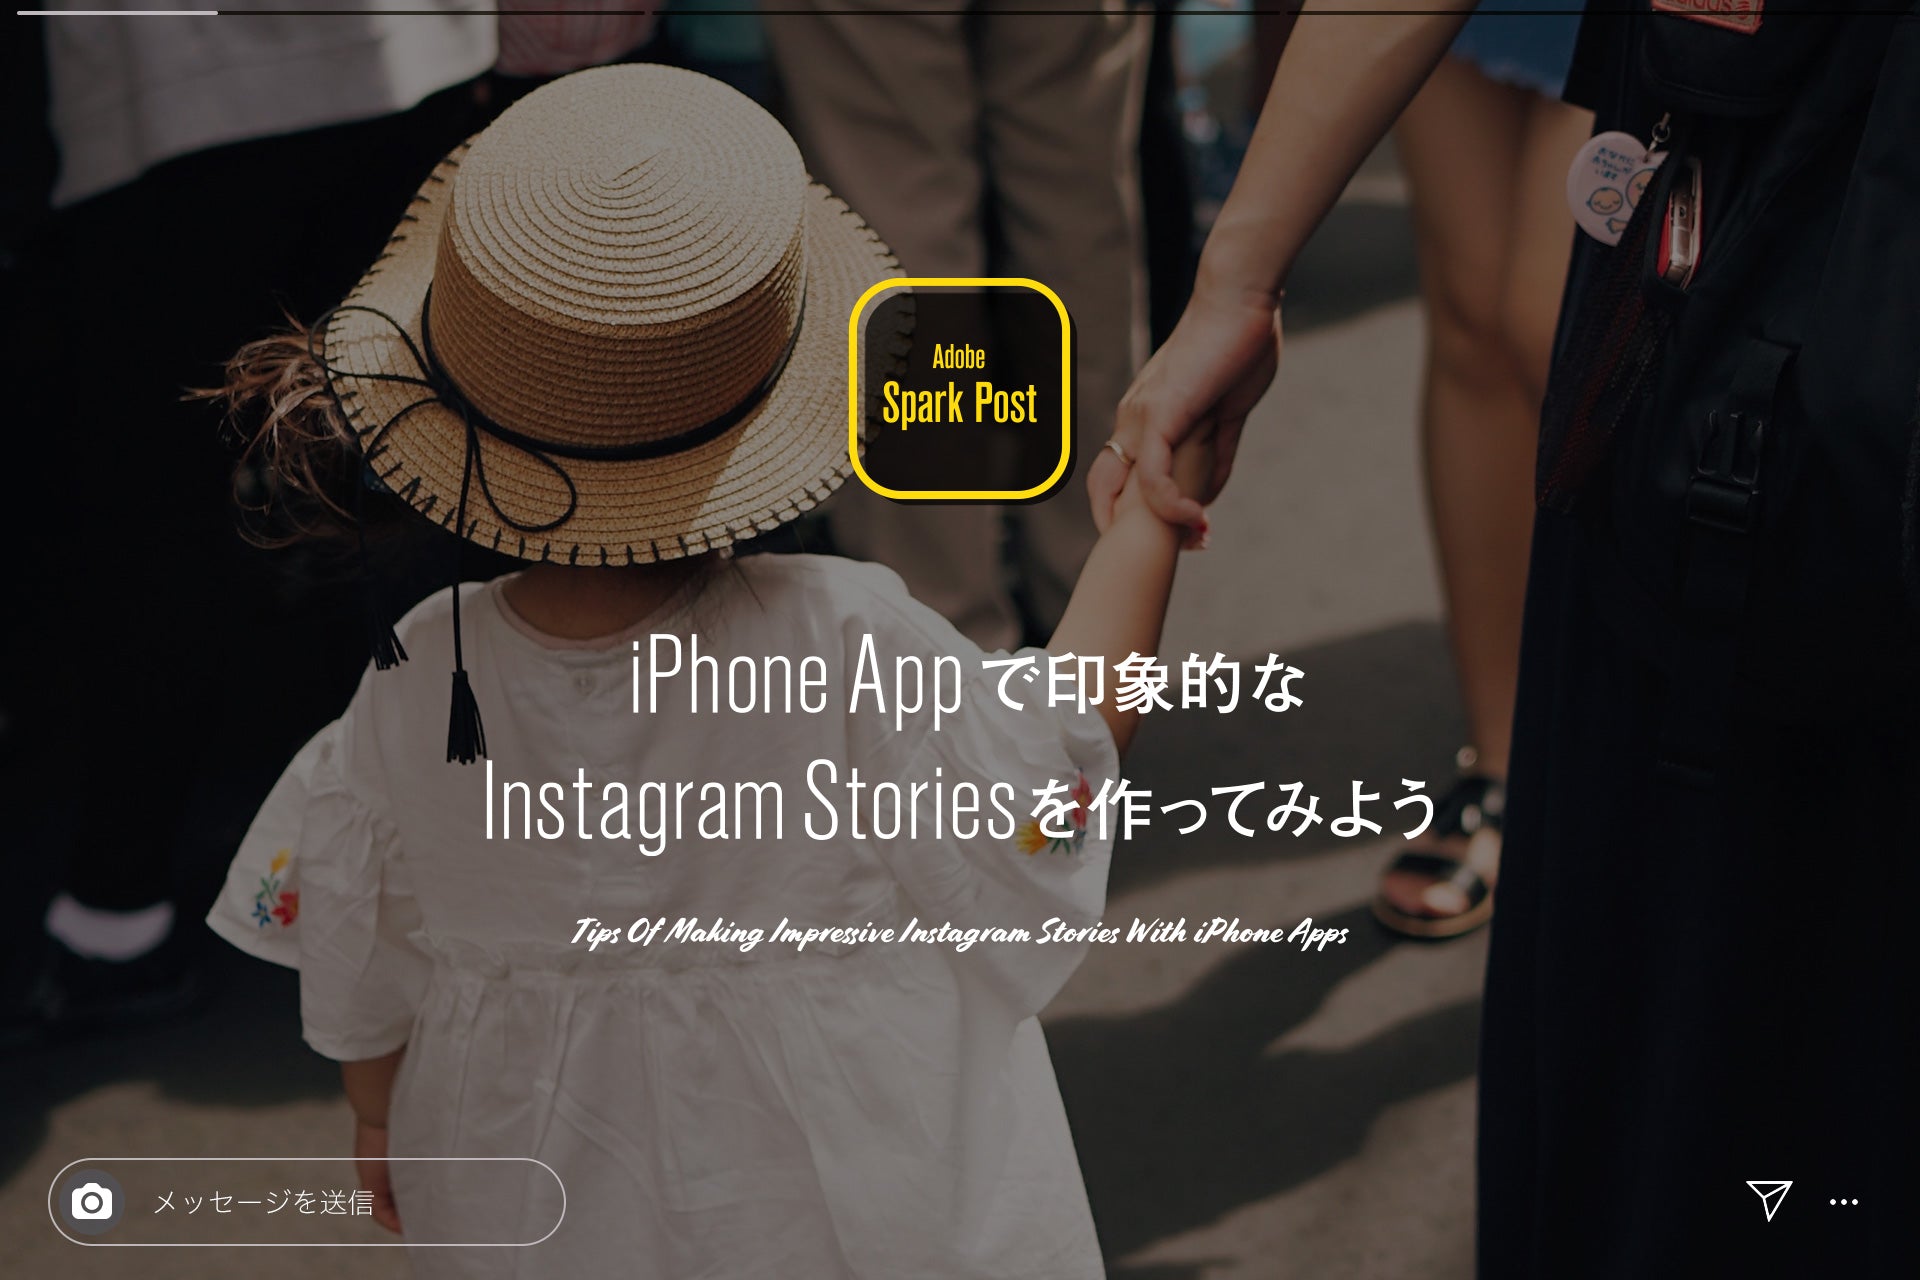 iPhone Appで印象的な<br />Instagram Storiesを<br />作ってみよう<br />"Adobe Spark Post"